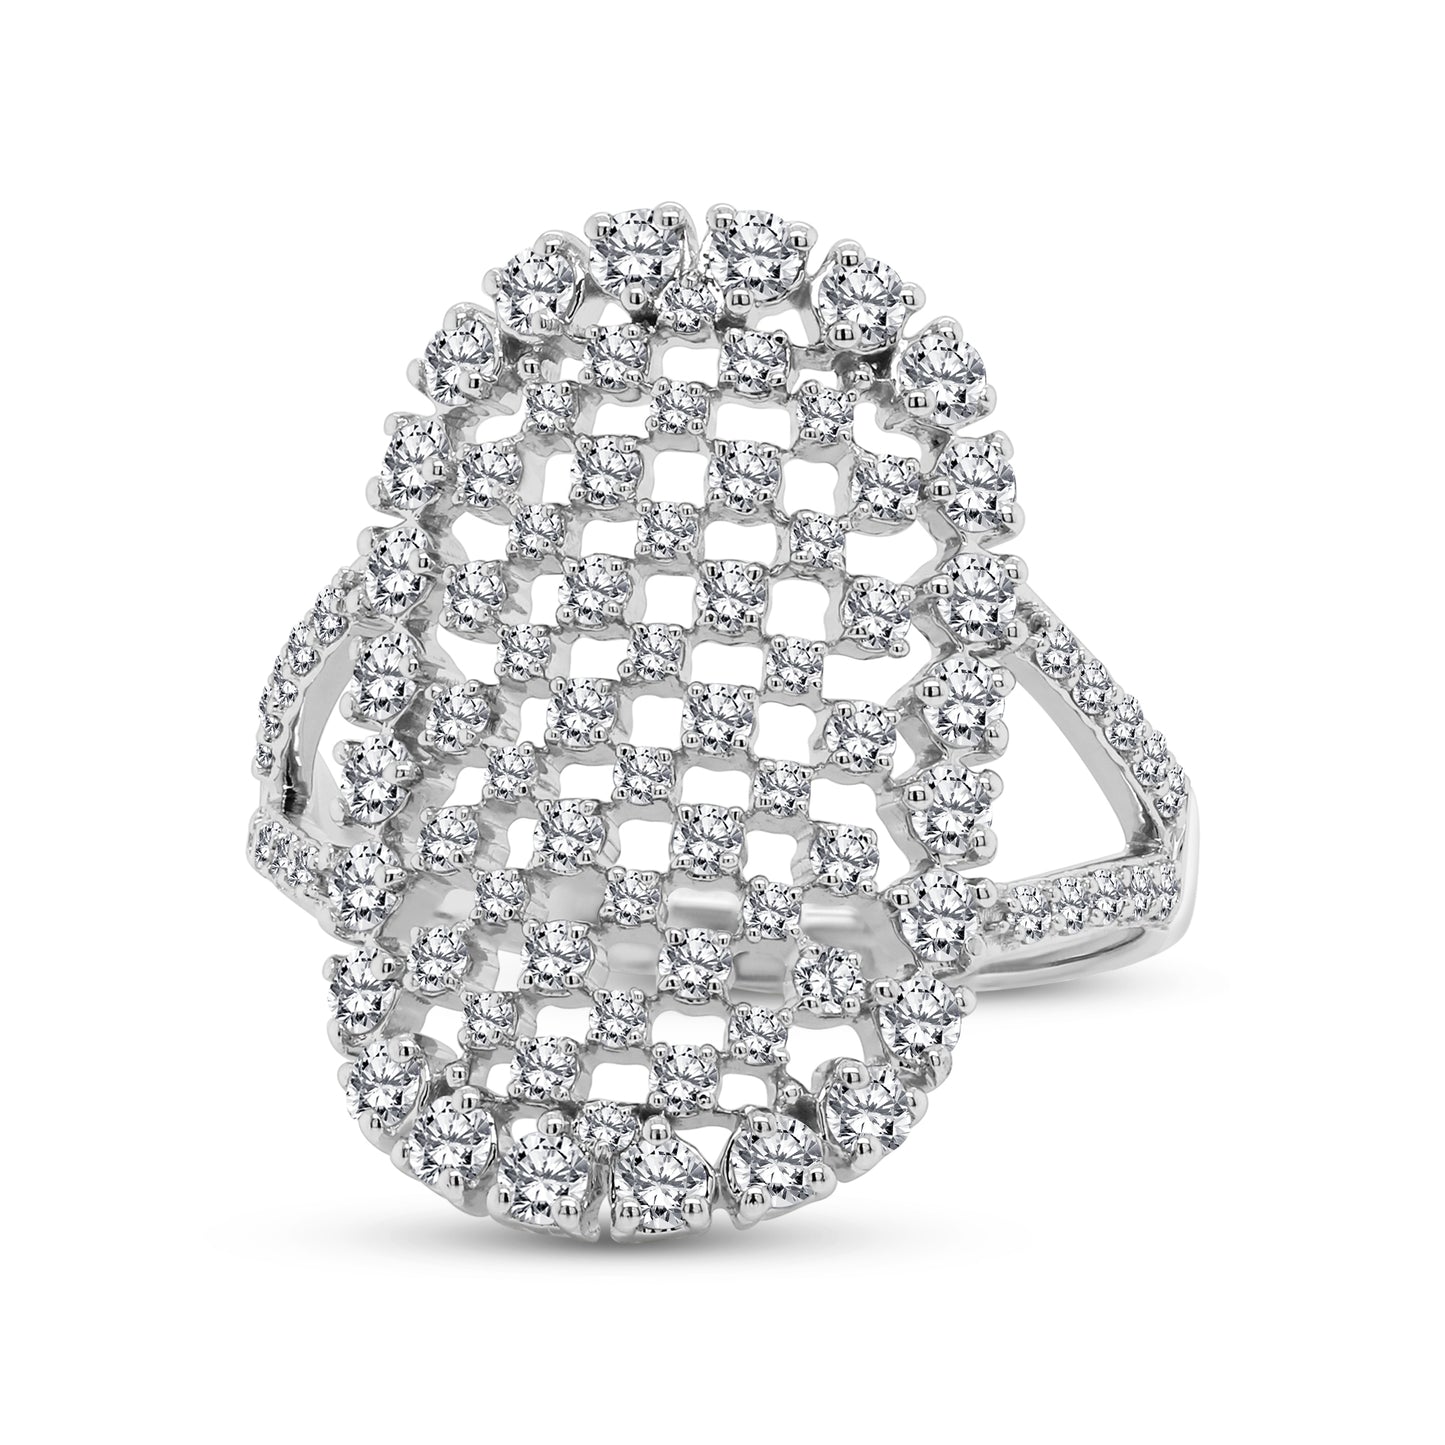 Lady's 14 Karat White Gold Free Form Diamond Fashion Ring